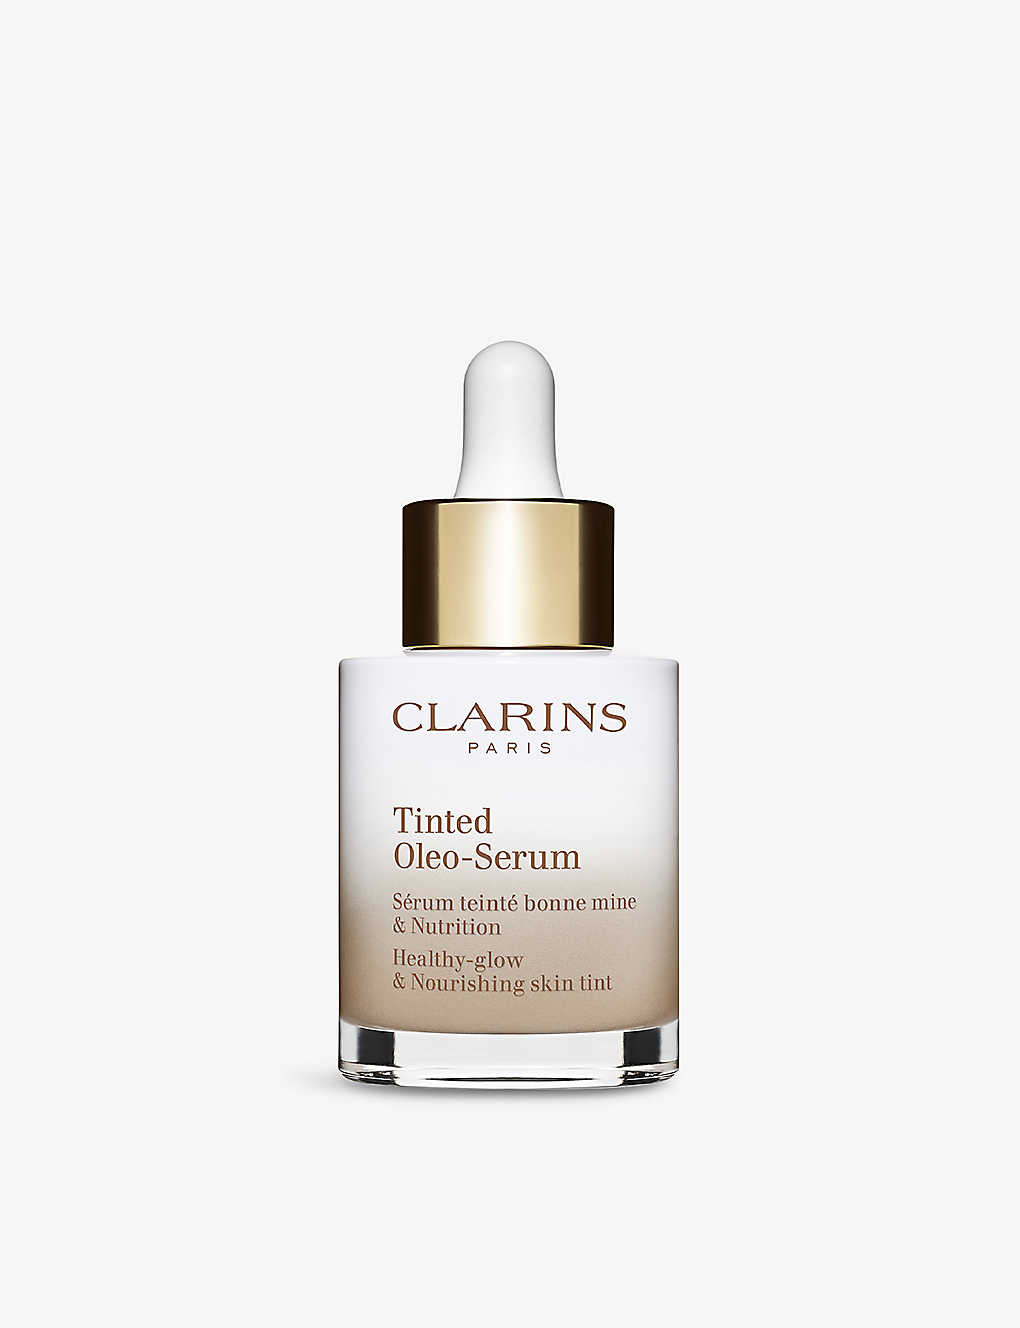 Clarins 1 Tinted Oleo-serum 01 Skin Tint 30ml